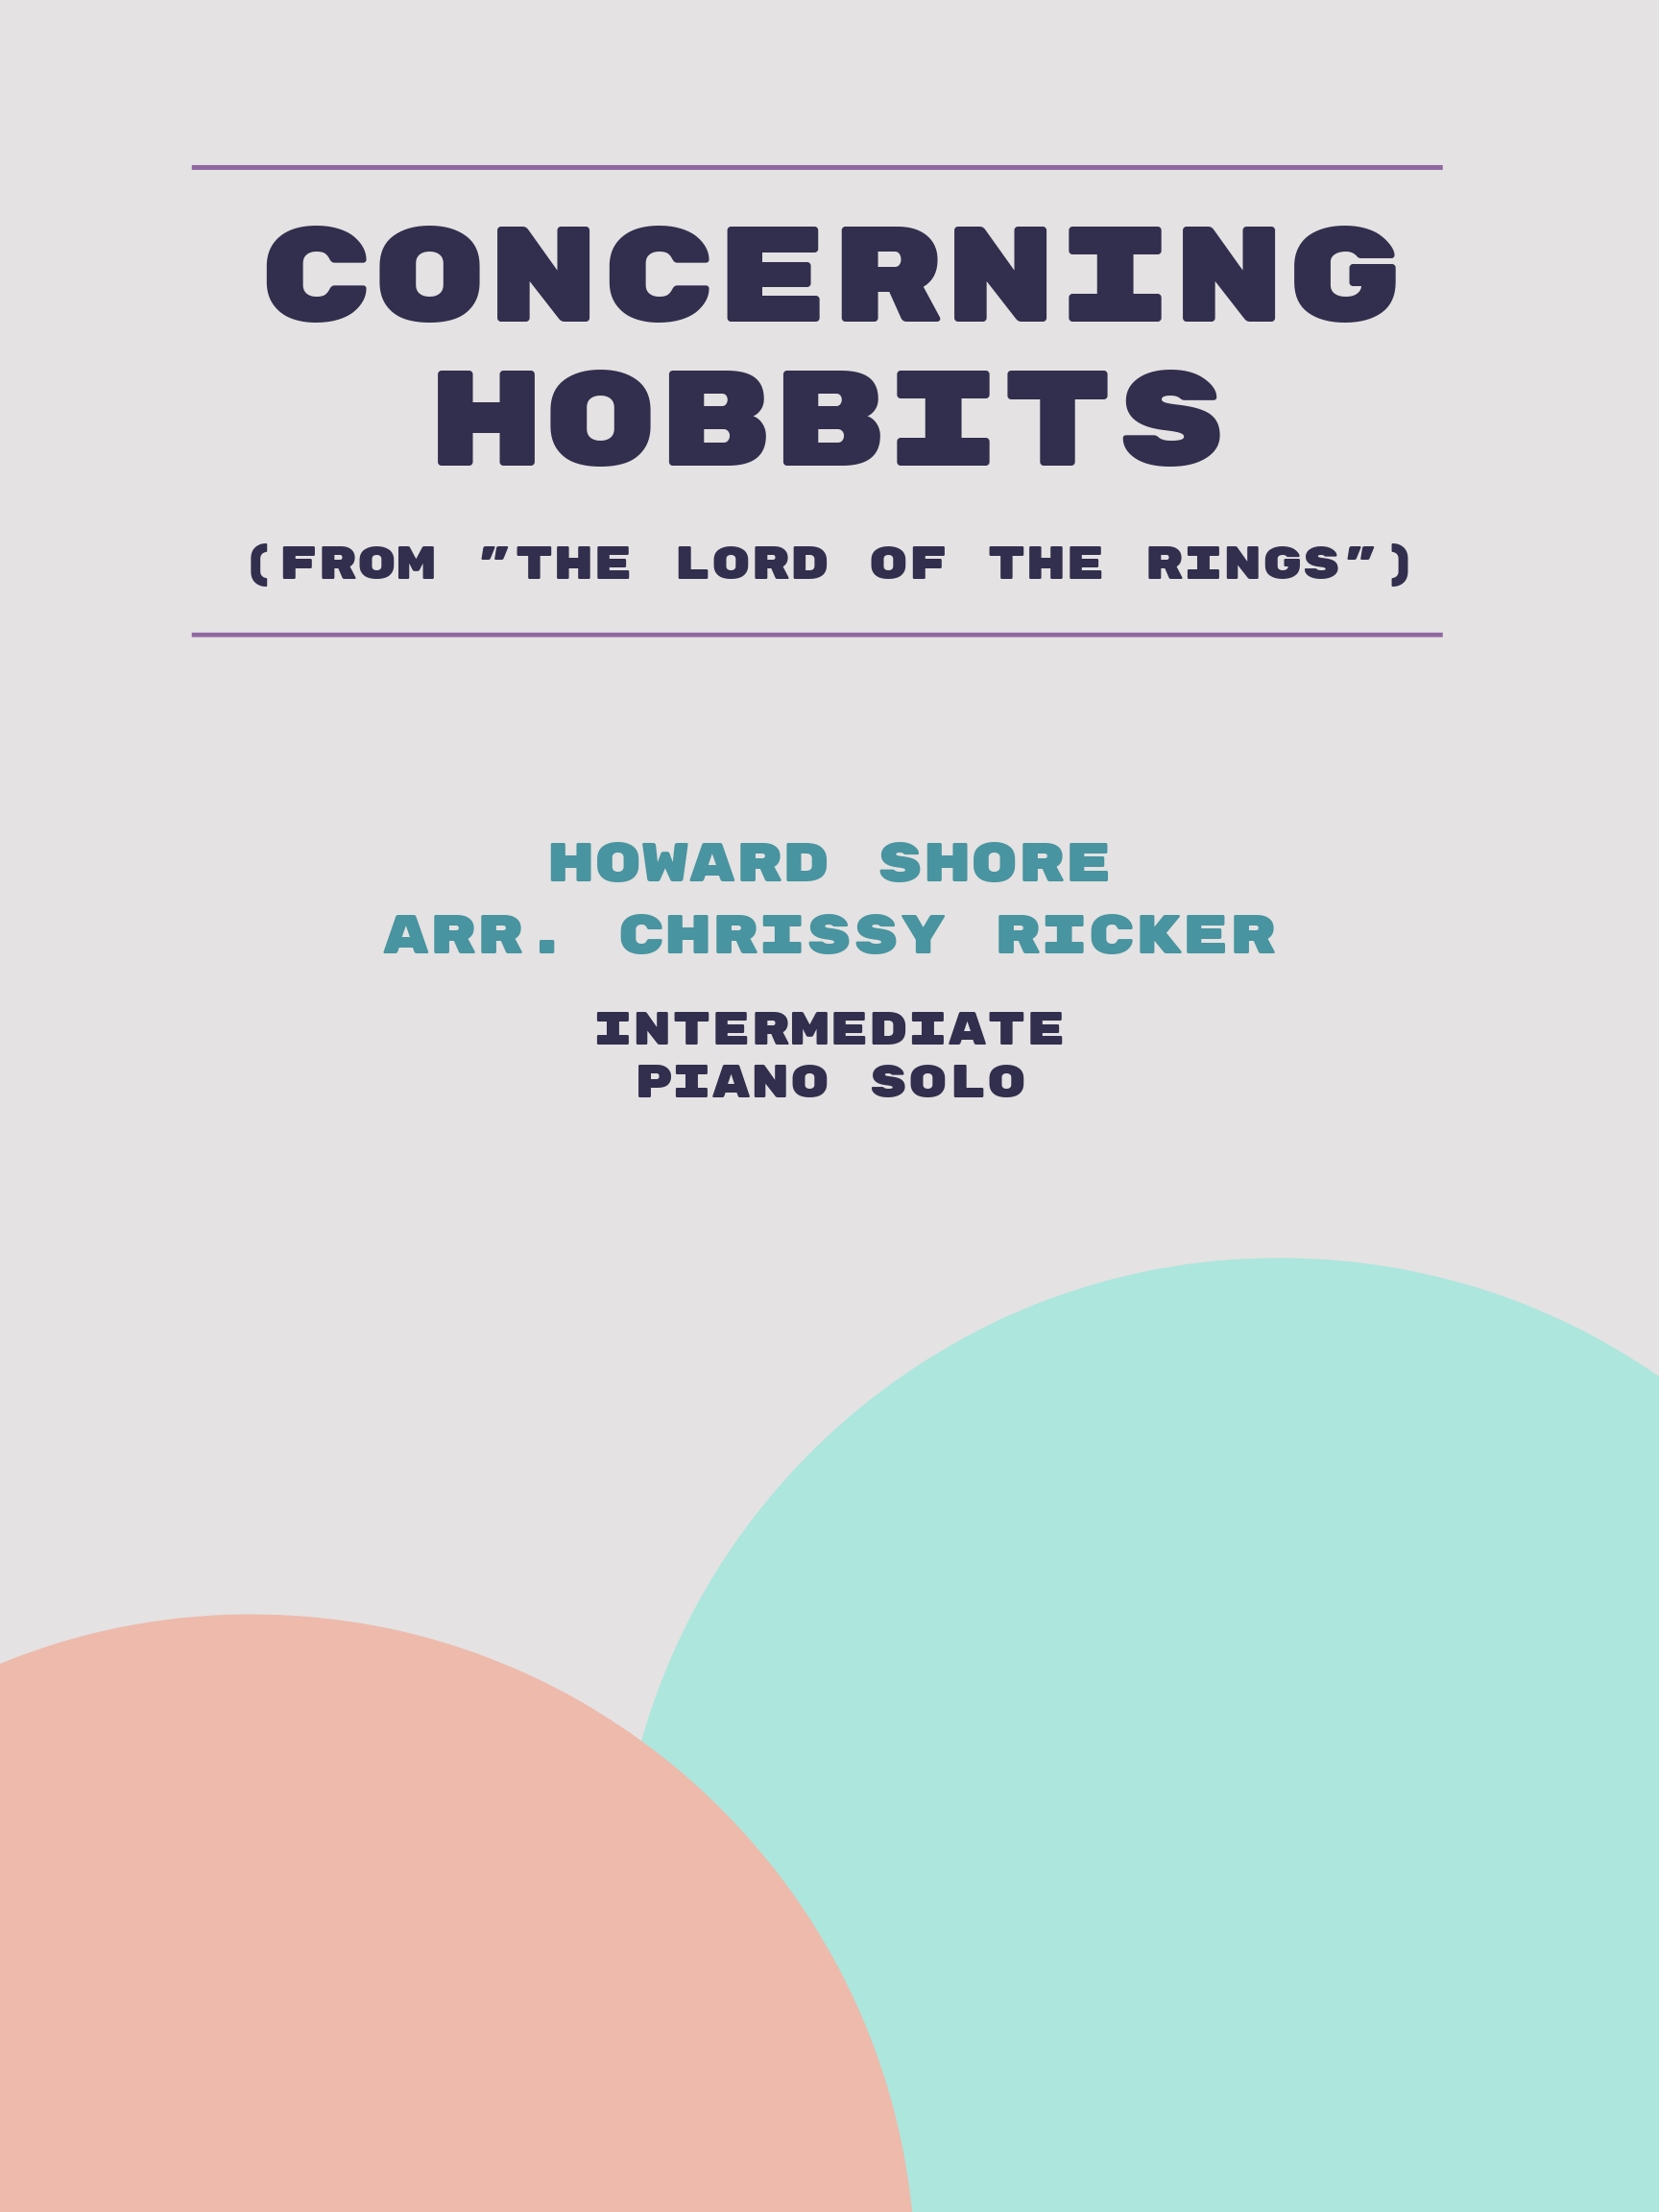 Concerning Hobbits by Howard Shore